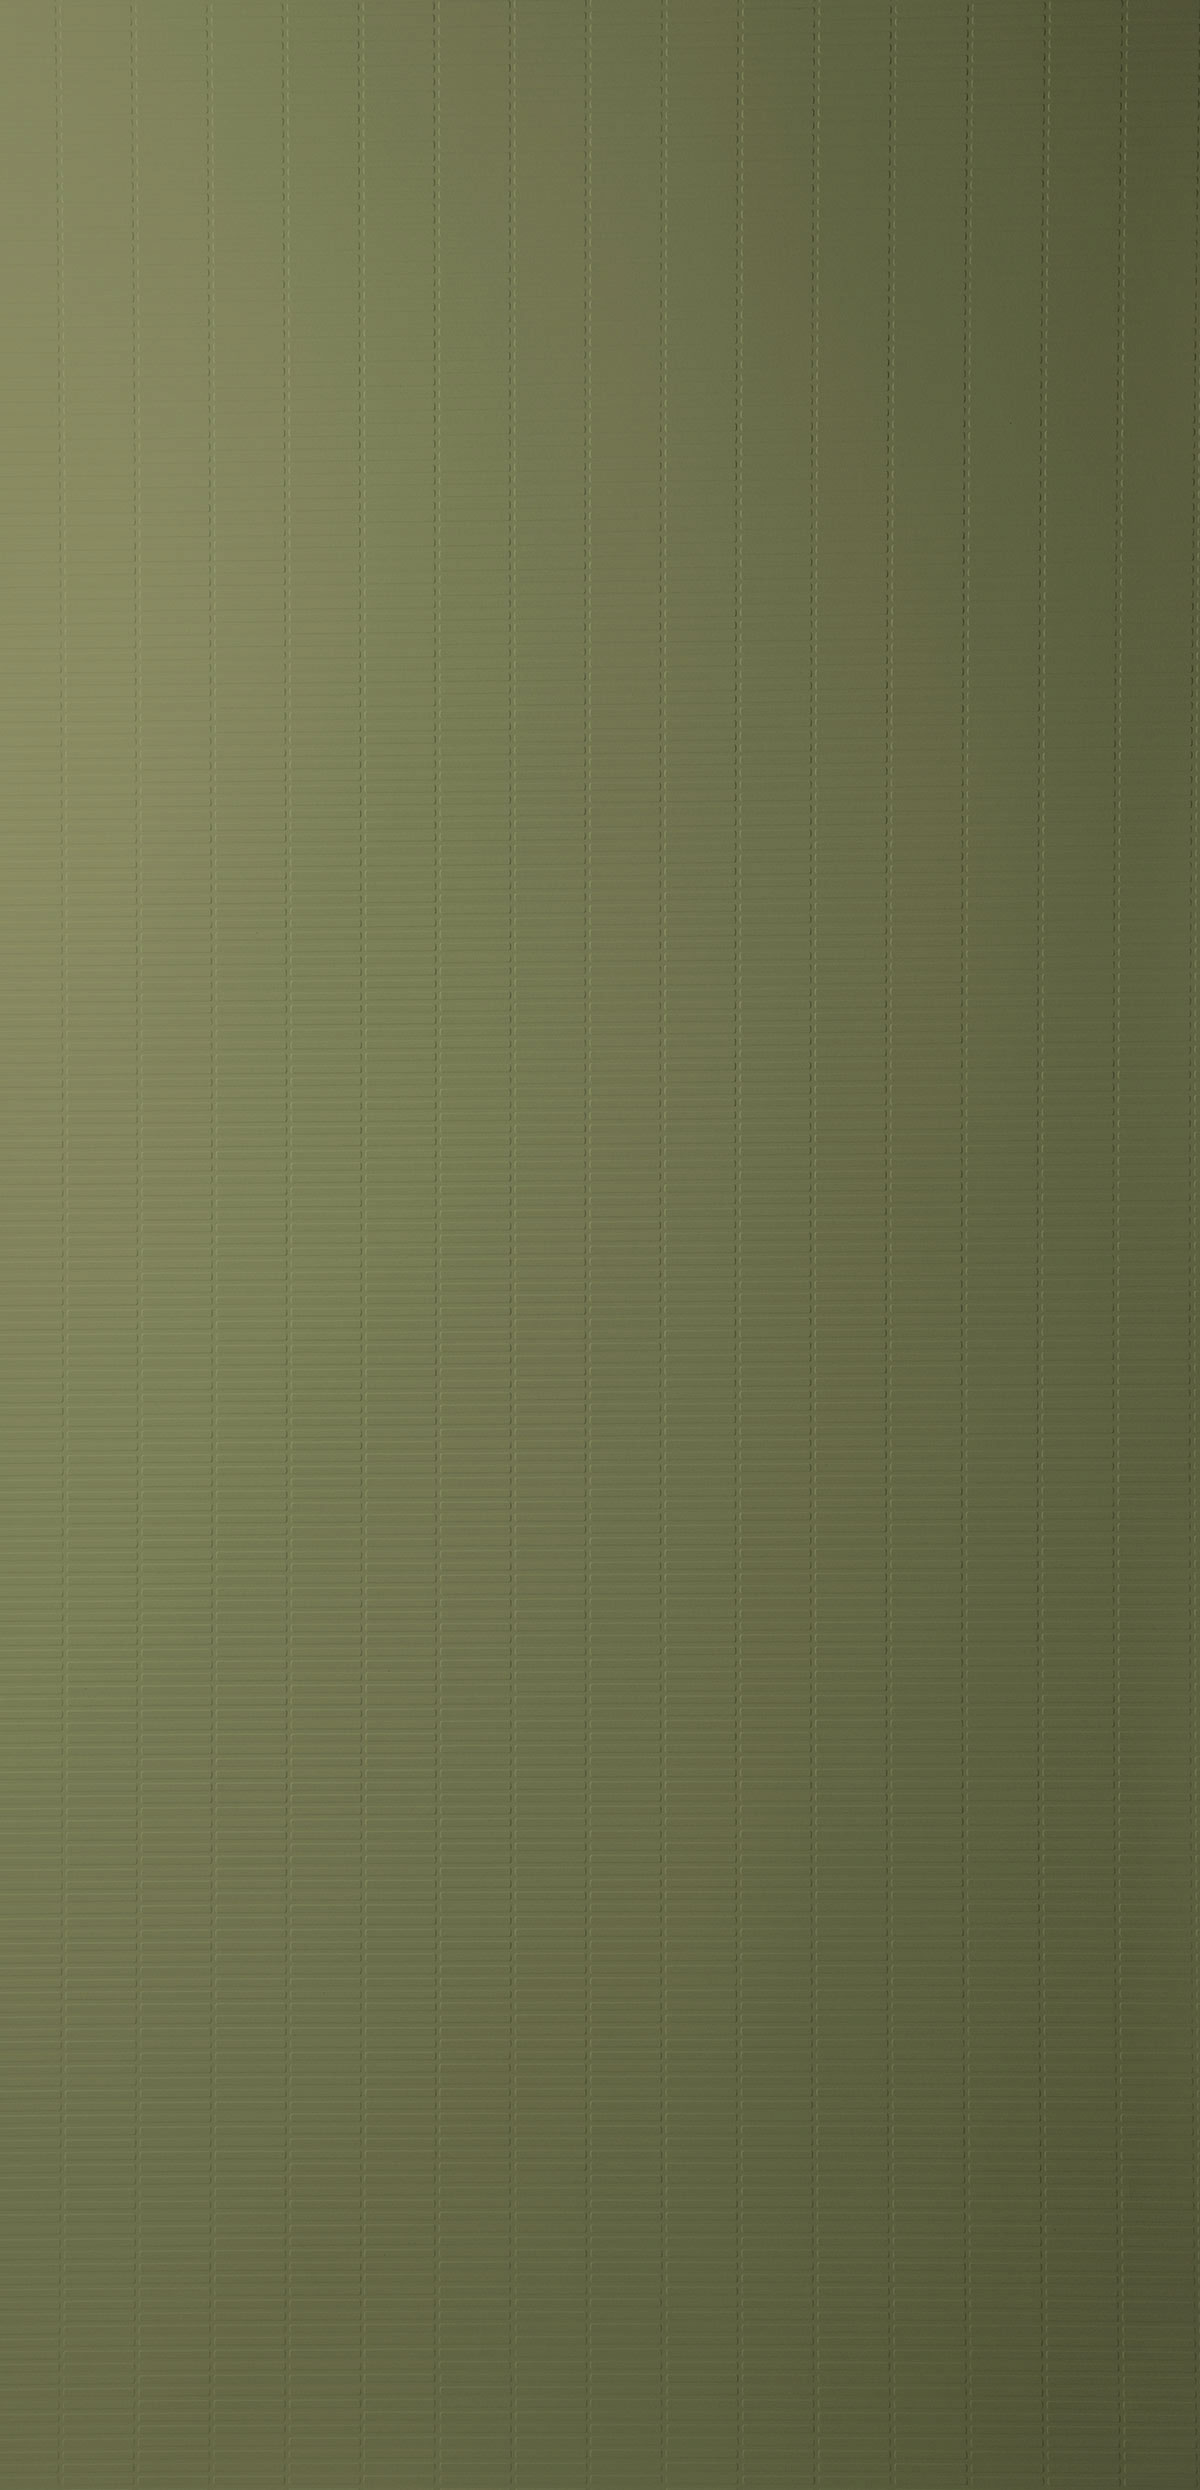 Panel Pale green 018 - Dots